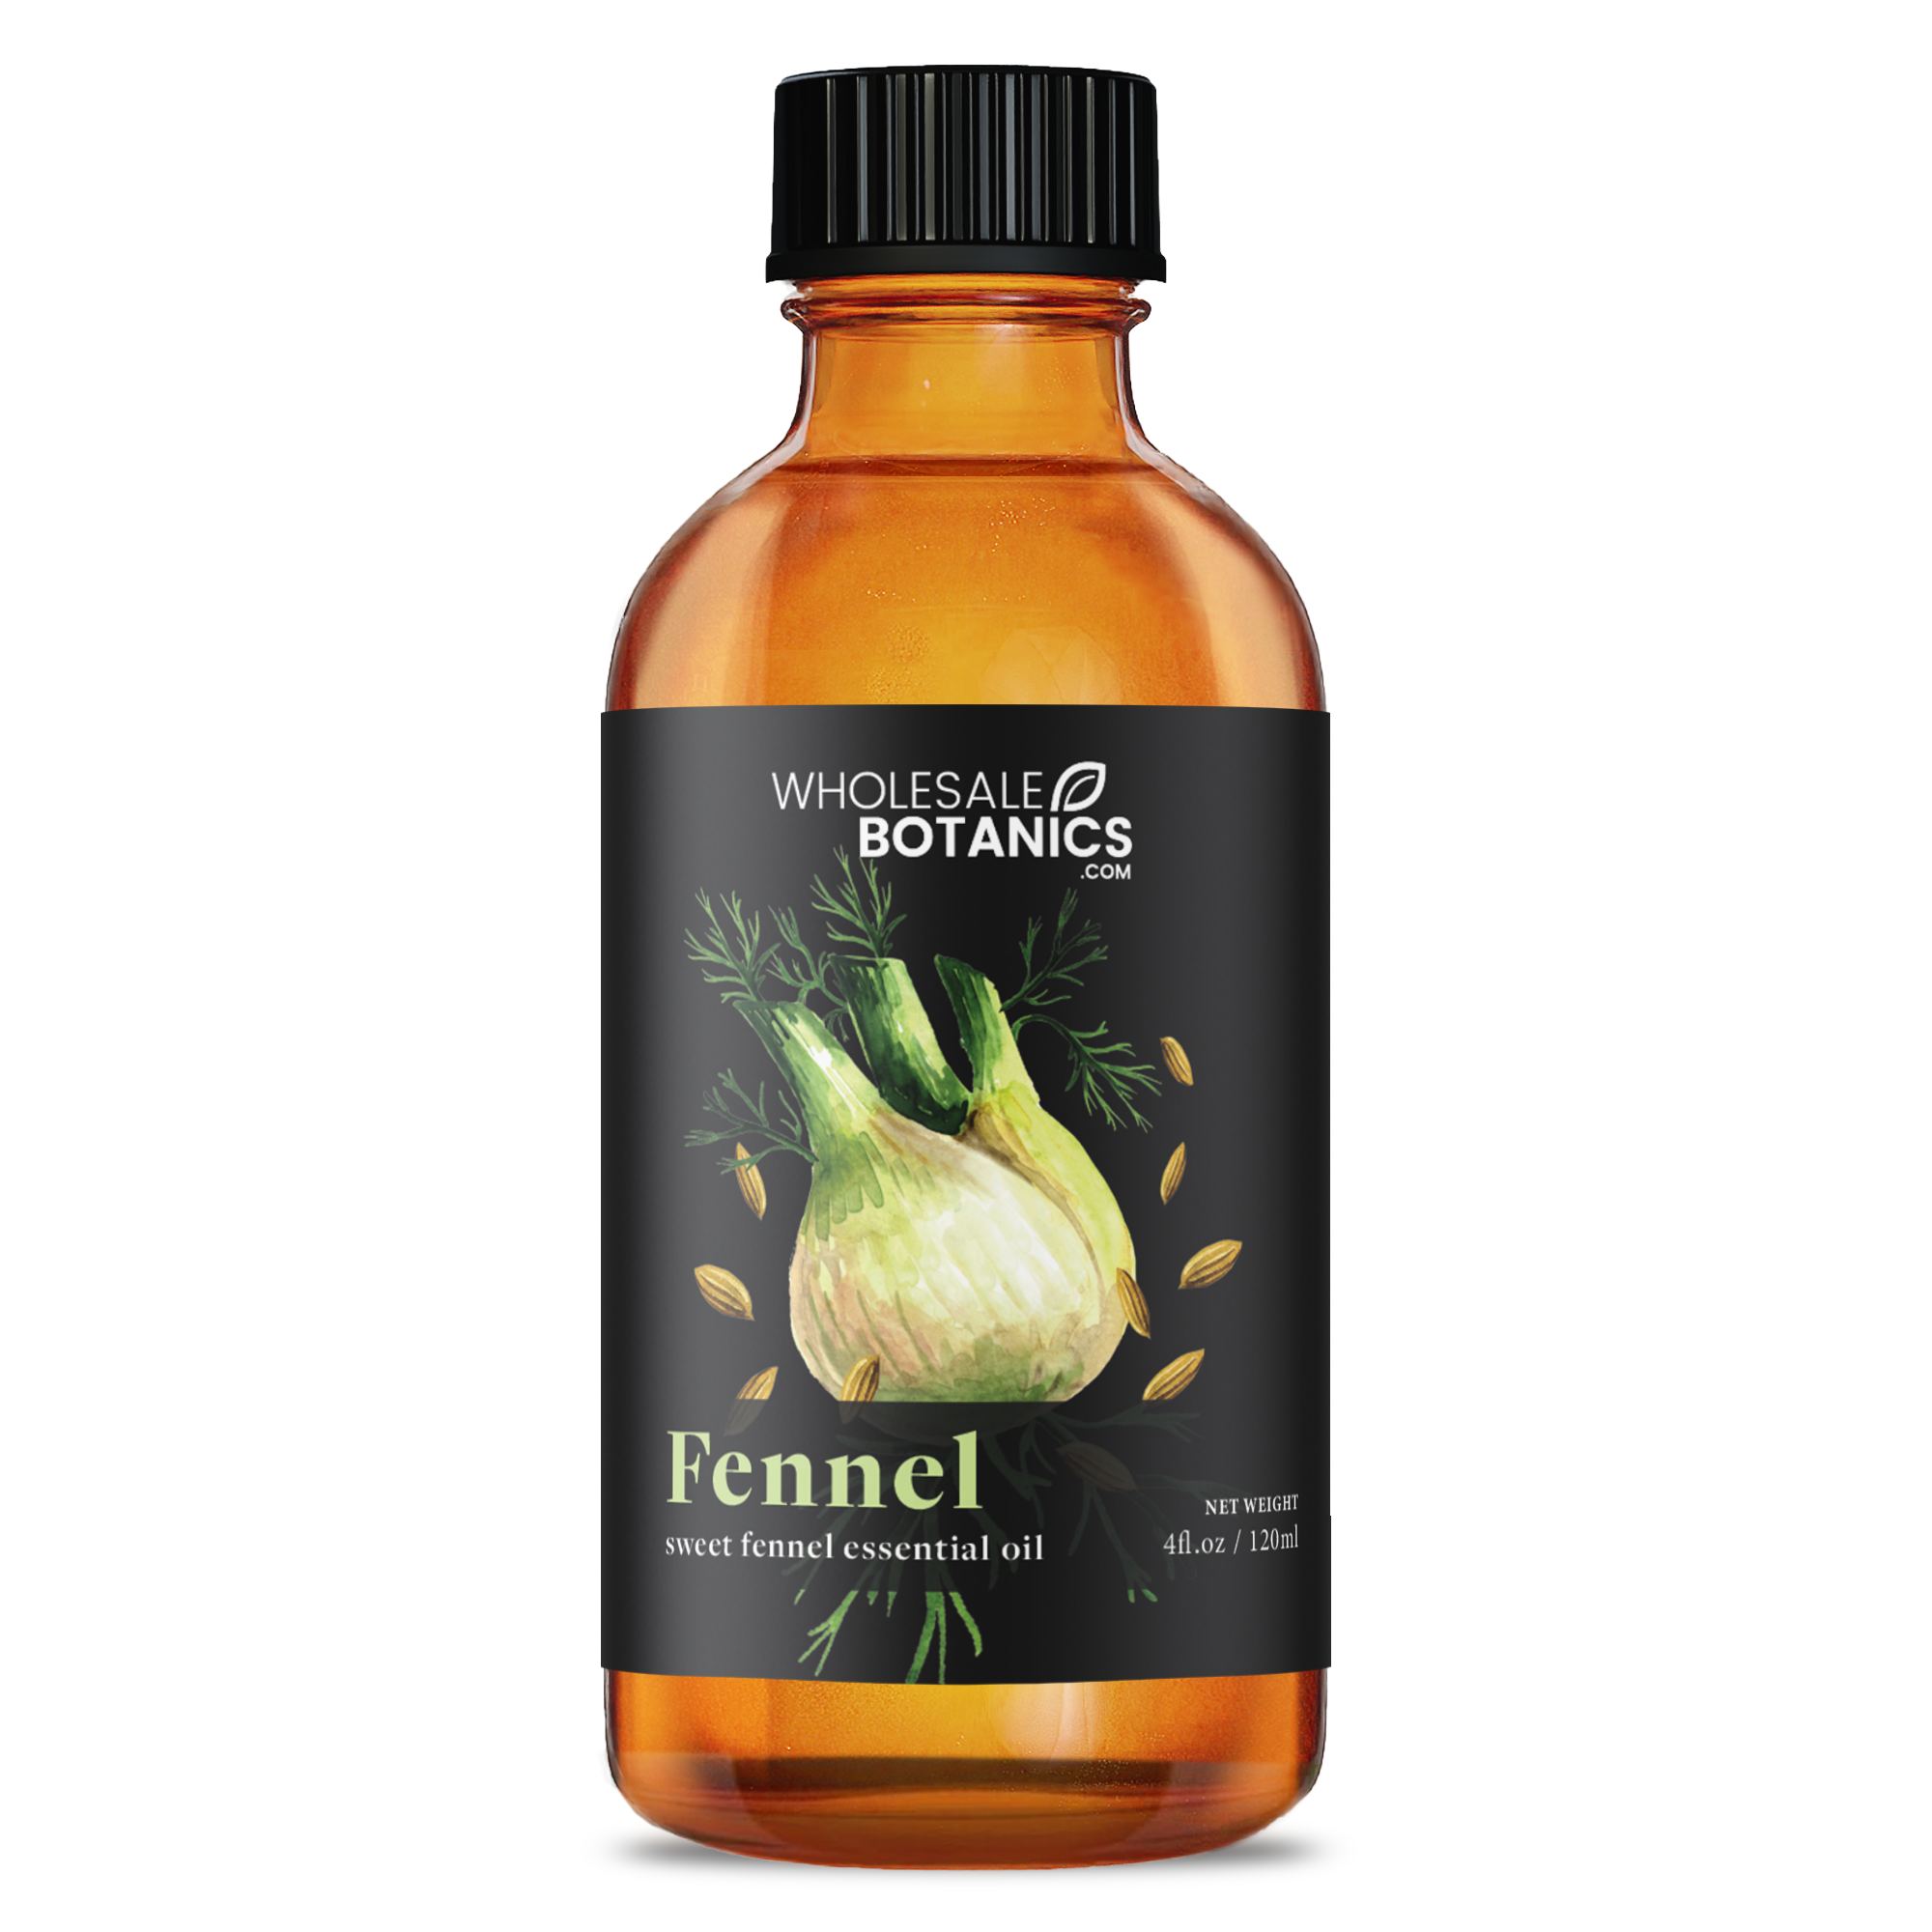 Fennel (sweet) Essential Oil